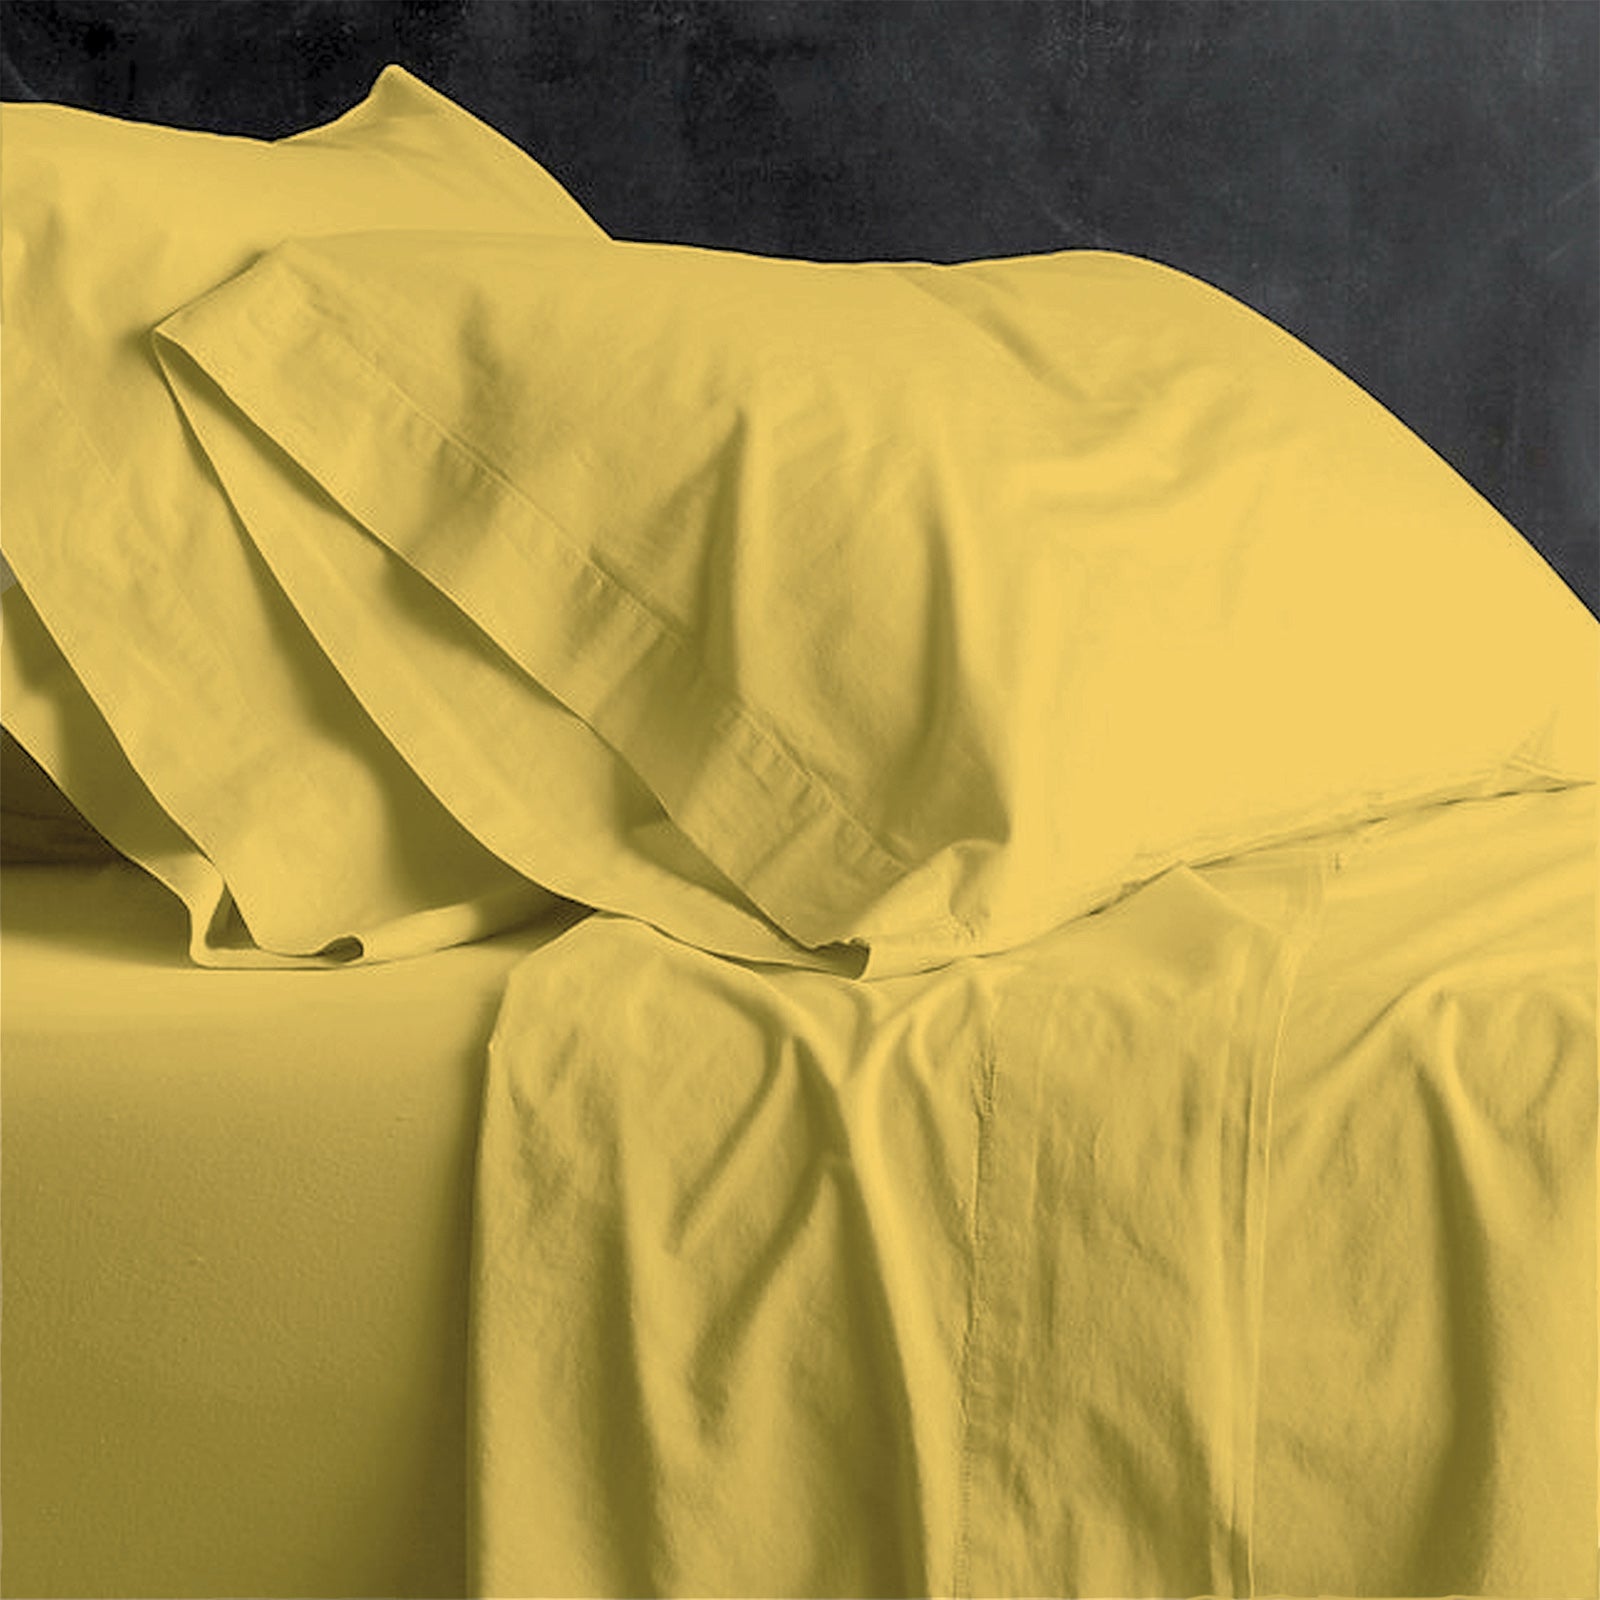 Park Avenue European Vintage Washed Cotton Sheet sets Misted Yellow